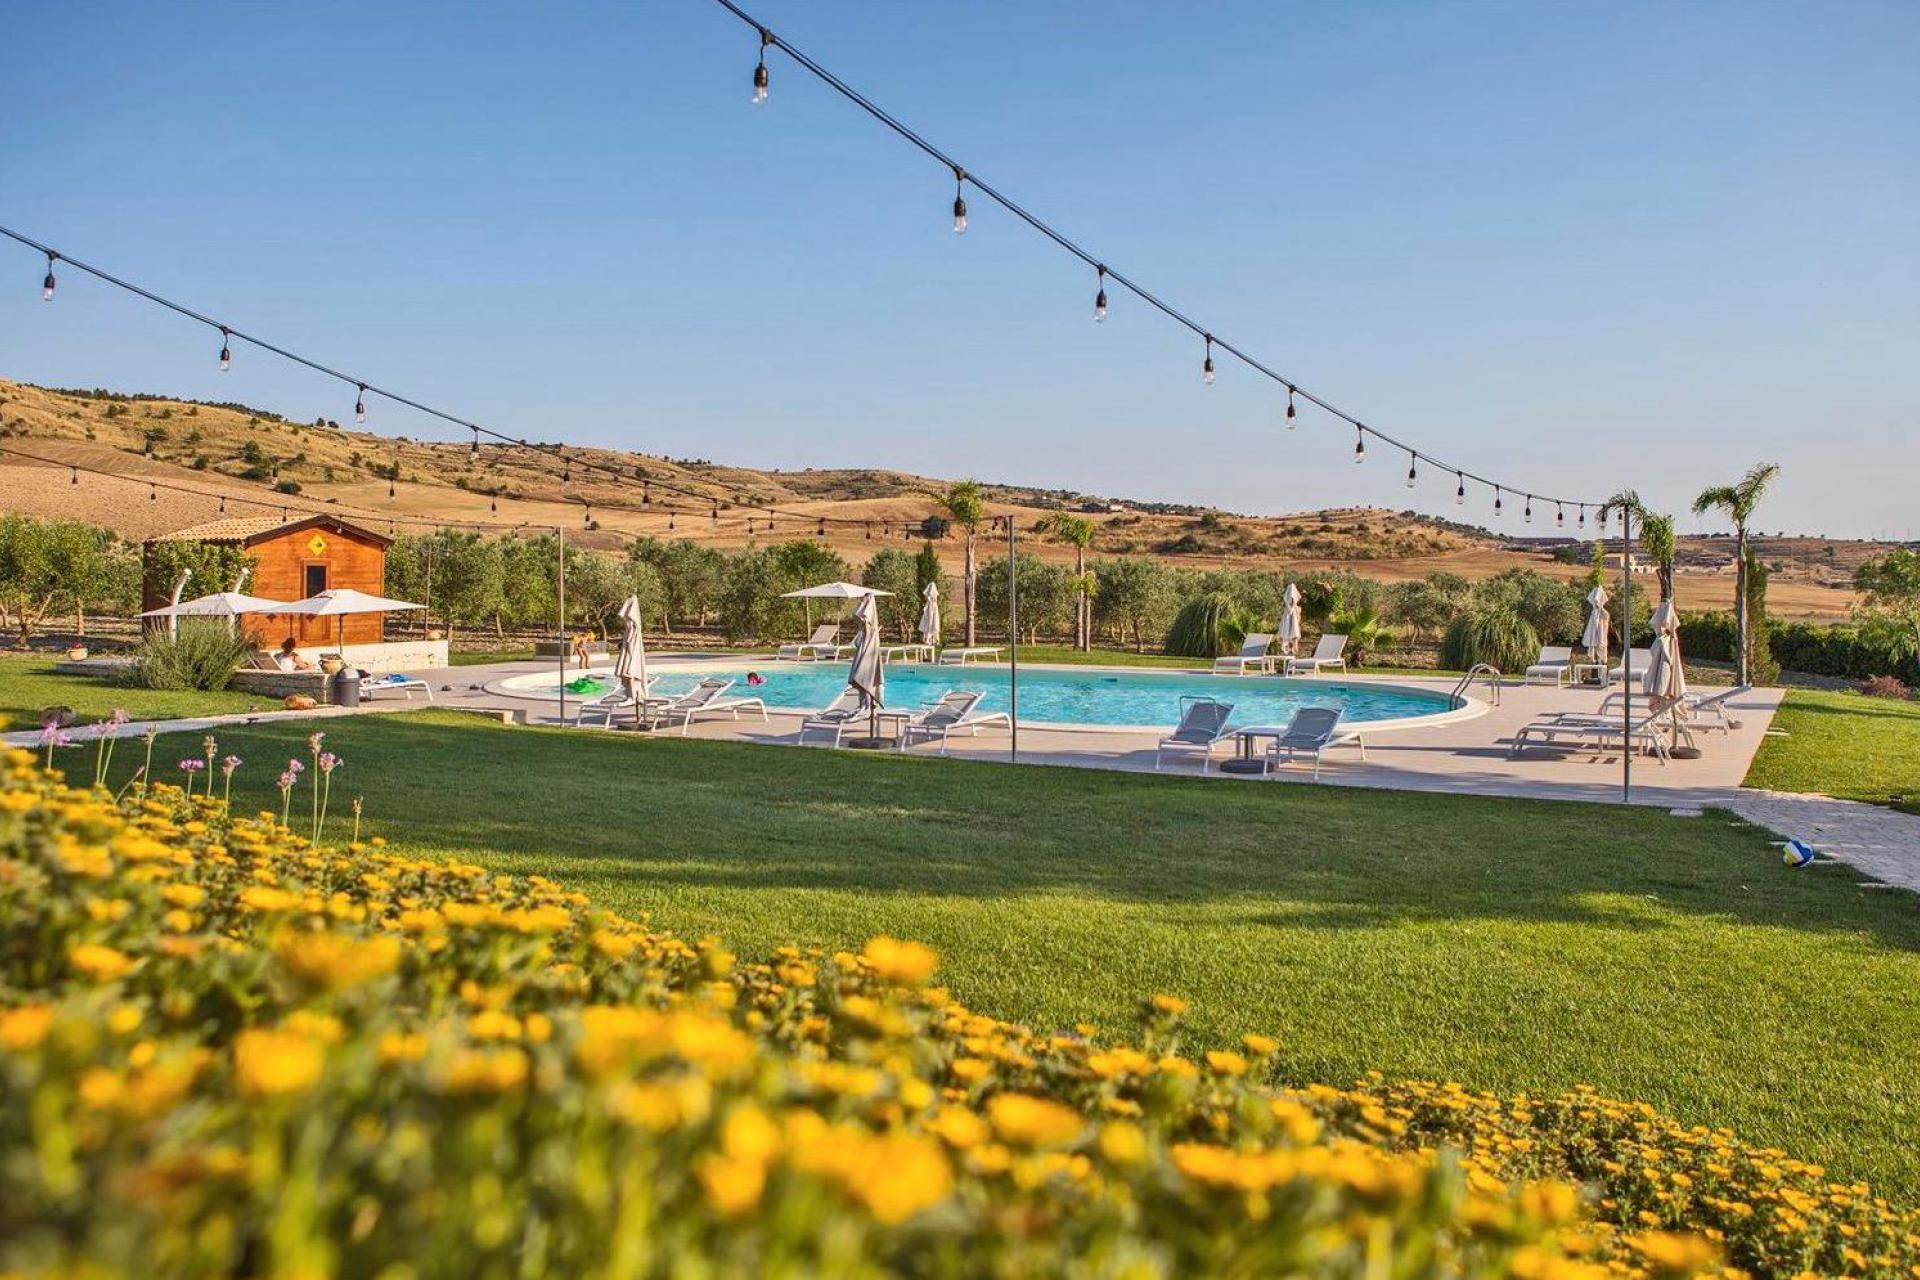 Agriturismo Sicilie Familievriendelijke agriturismo op Sicilië met groot zwembad